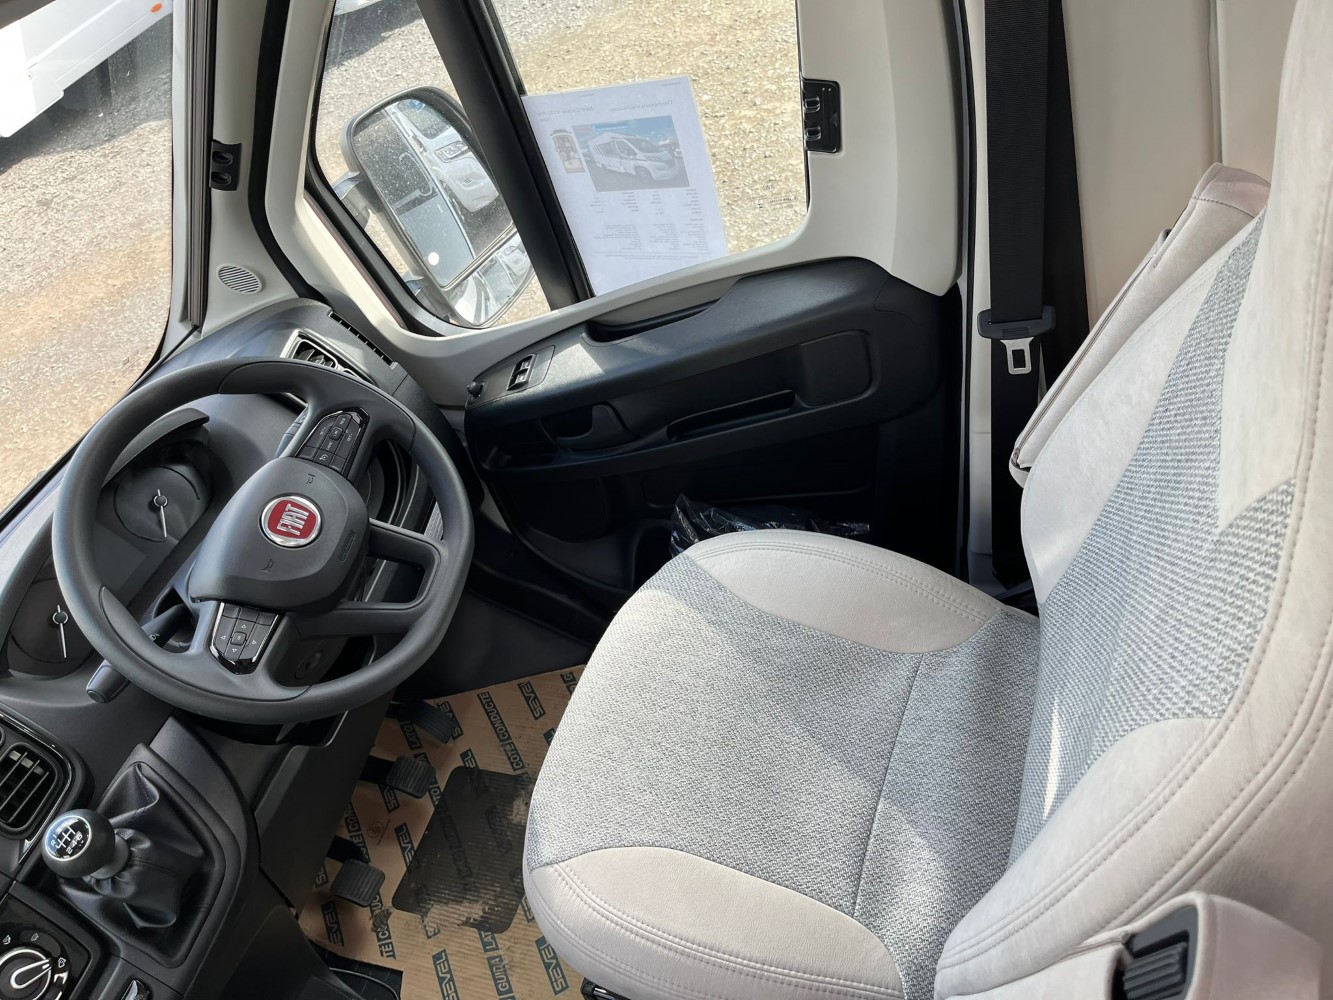 New Carado V132 Pro Van